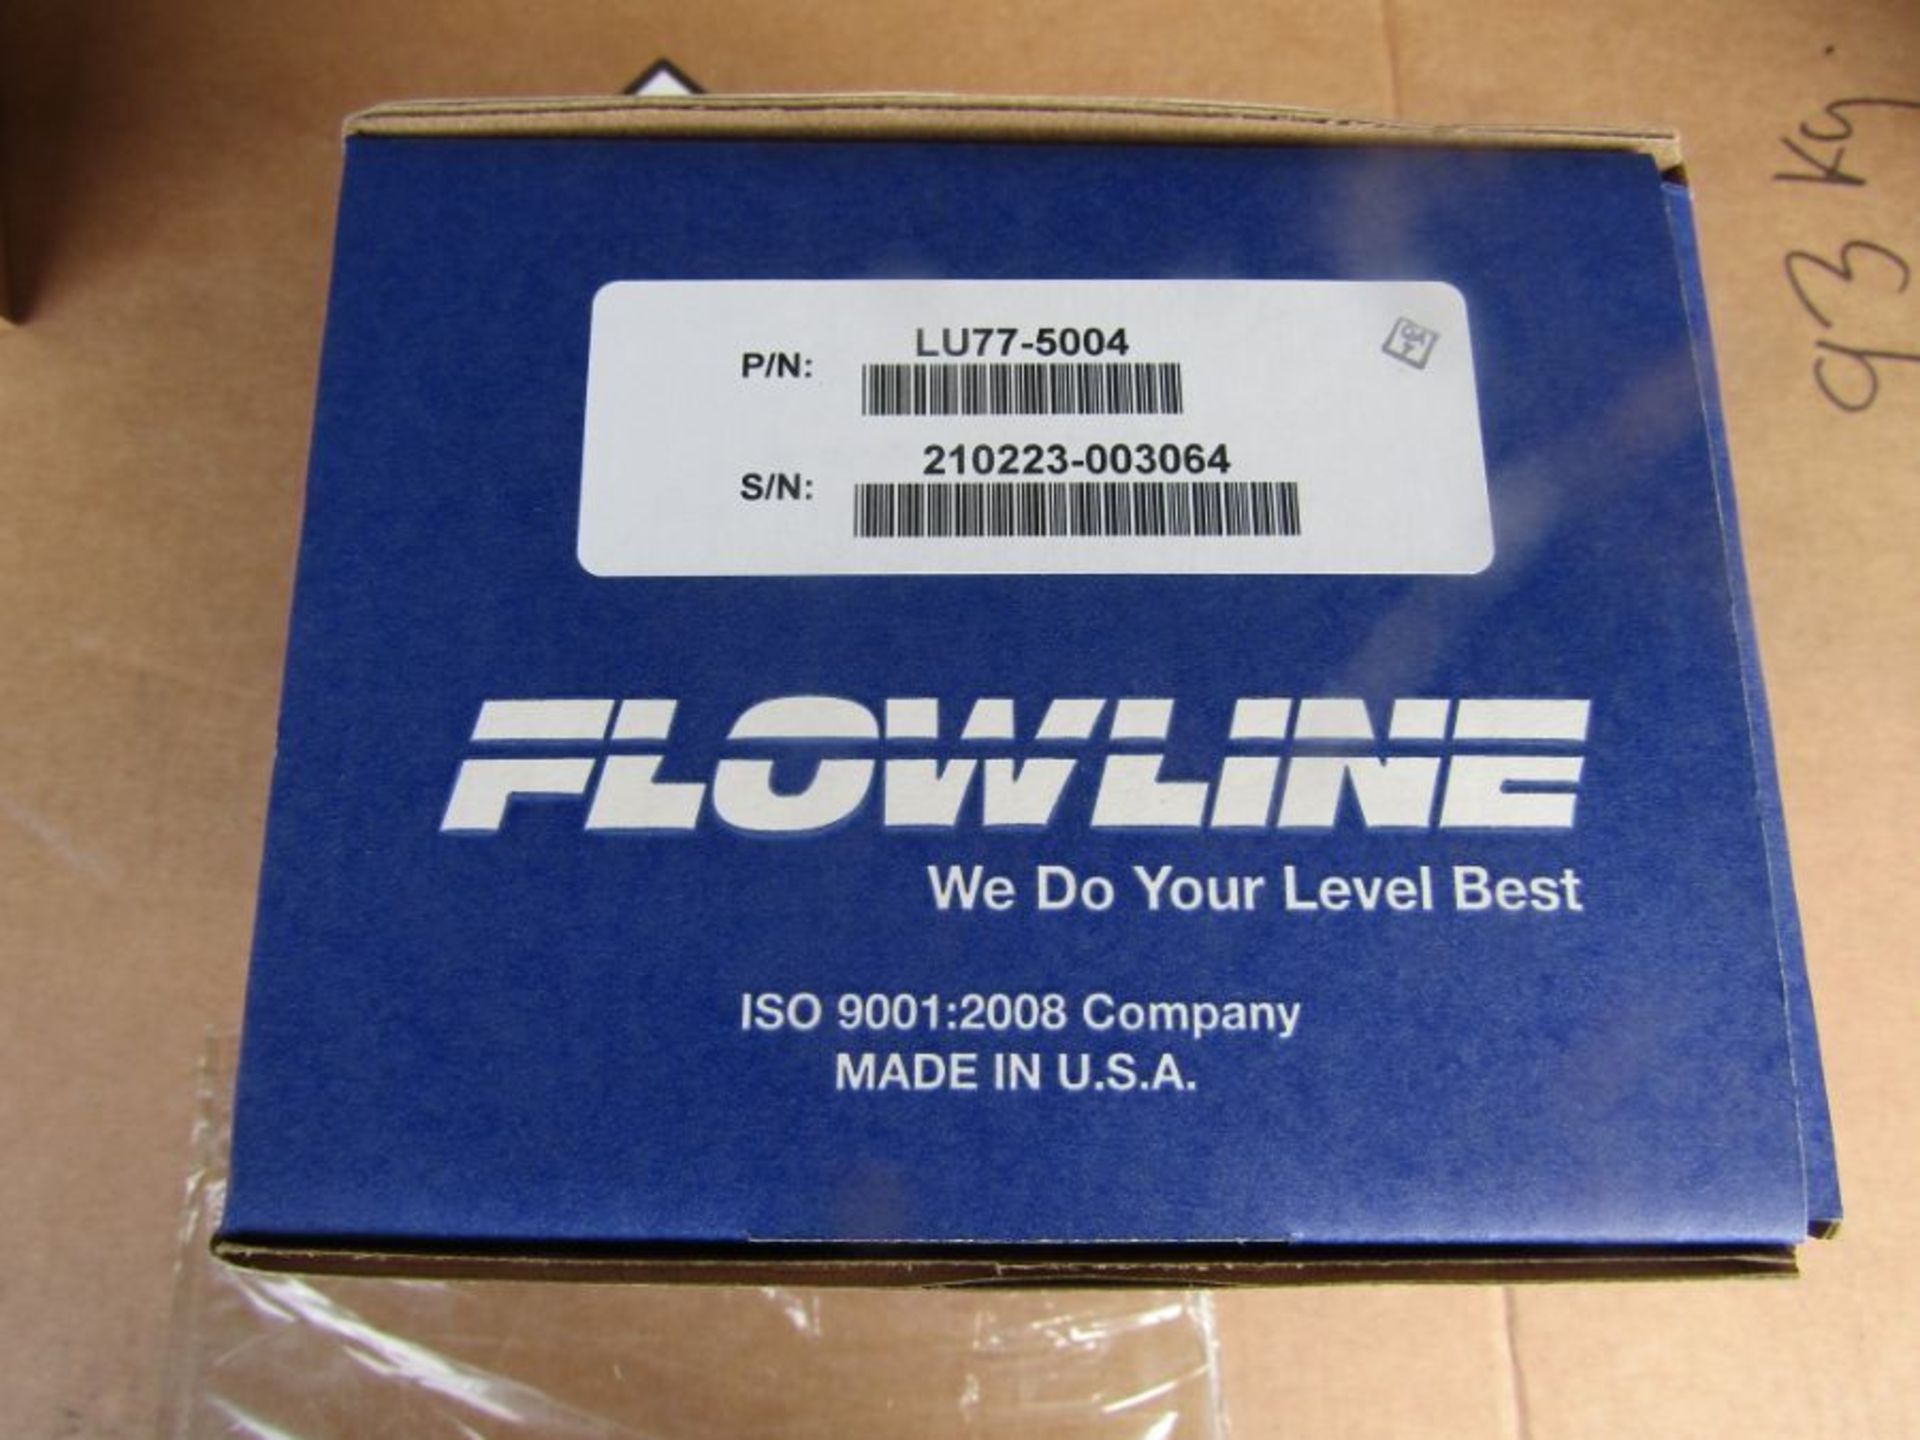 Flowline EchoSwitch Ultrasonic Level Switch Sensor, Vertical LU77-5004 TM 1240130 - Image 5 of 6